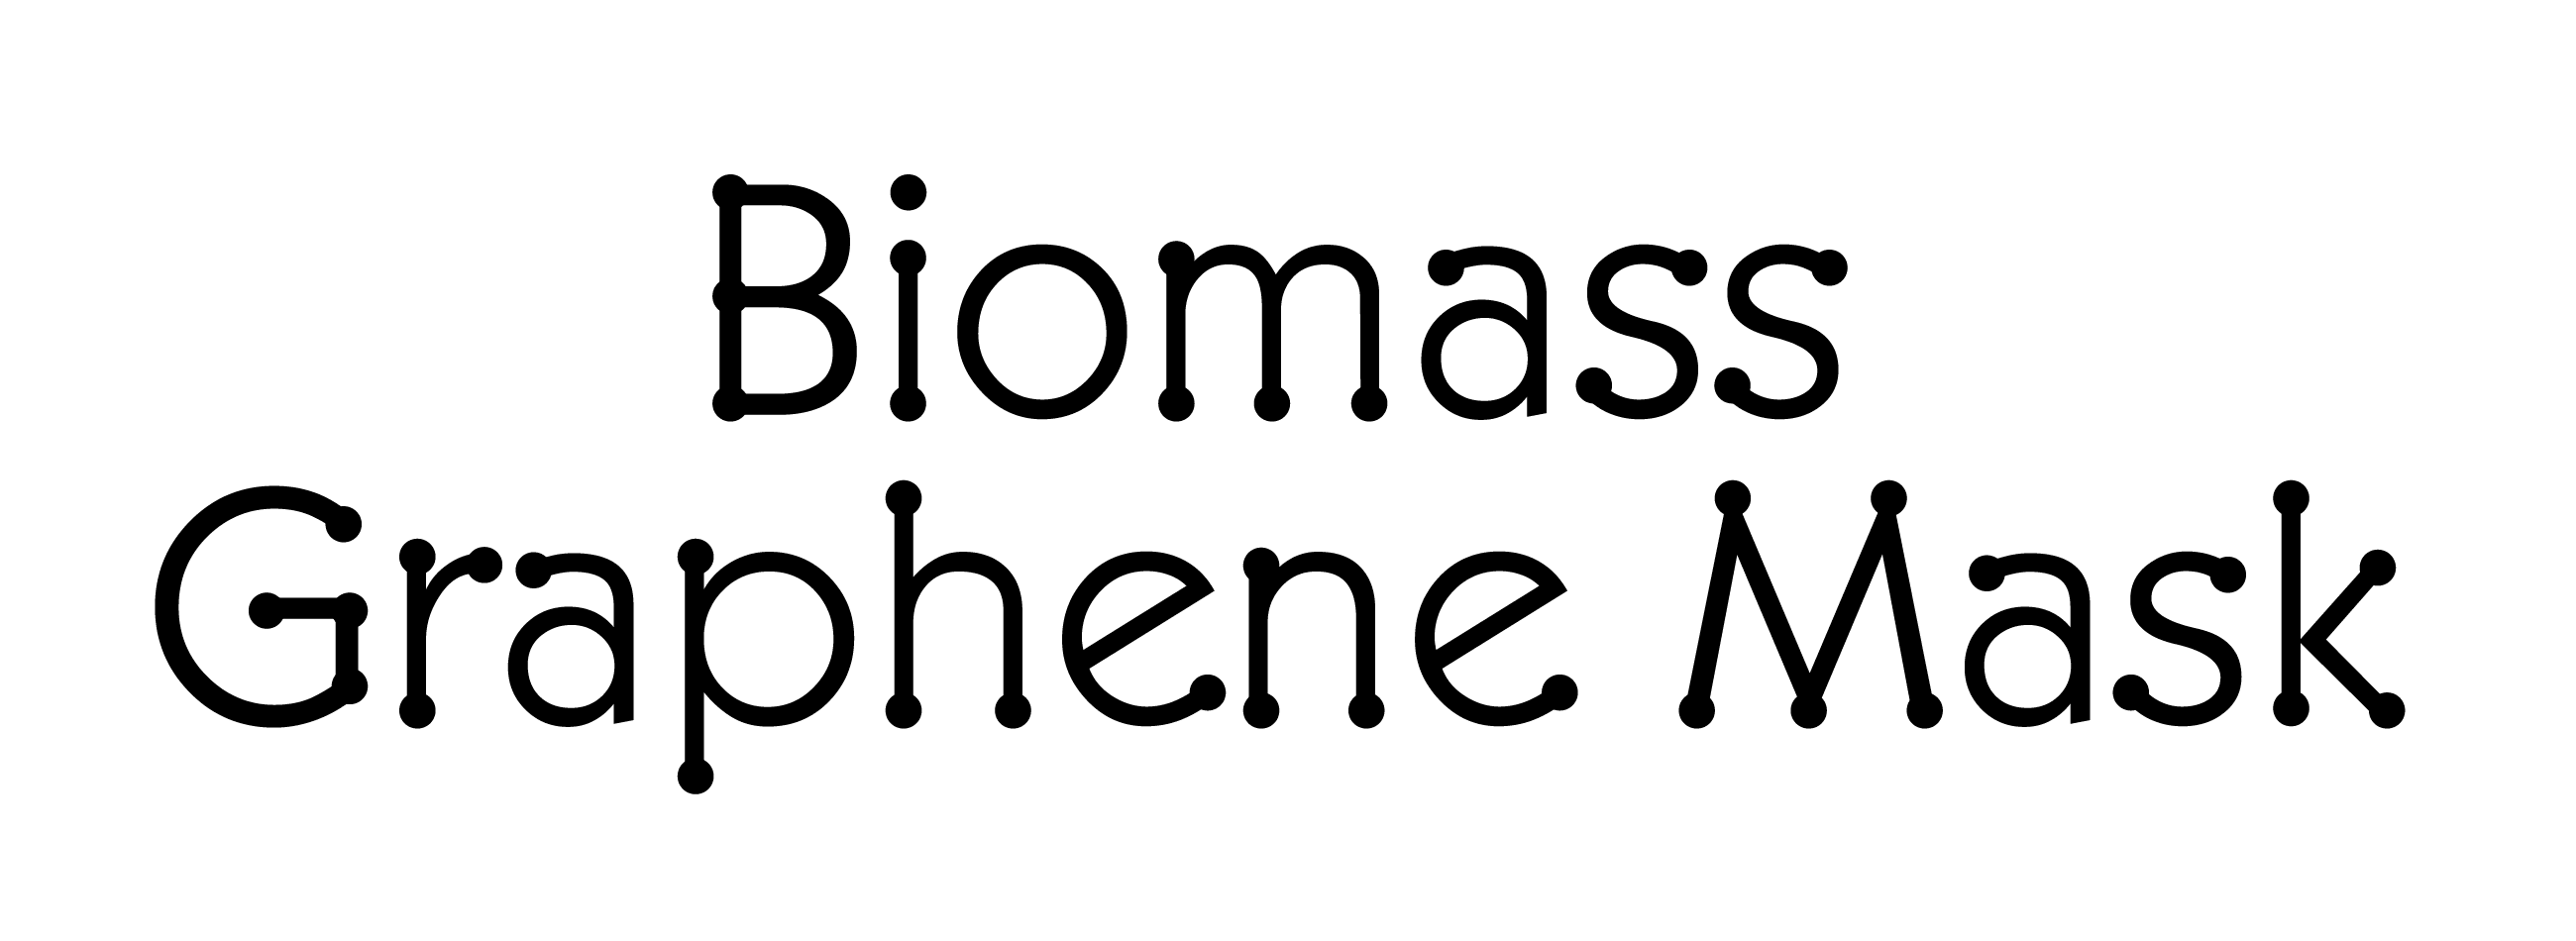 Biomass Graphene Mask-1